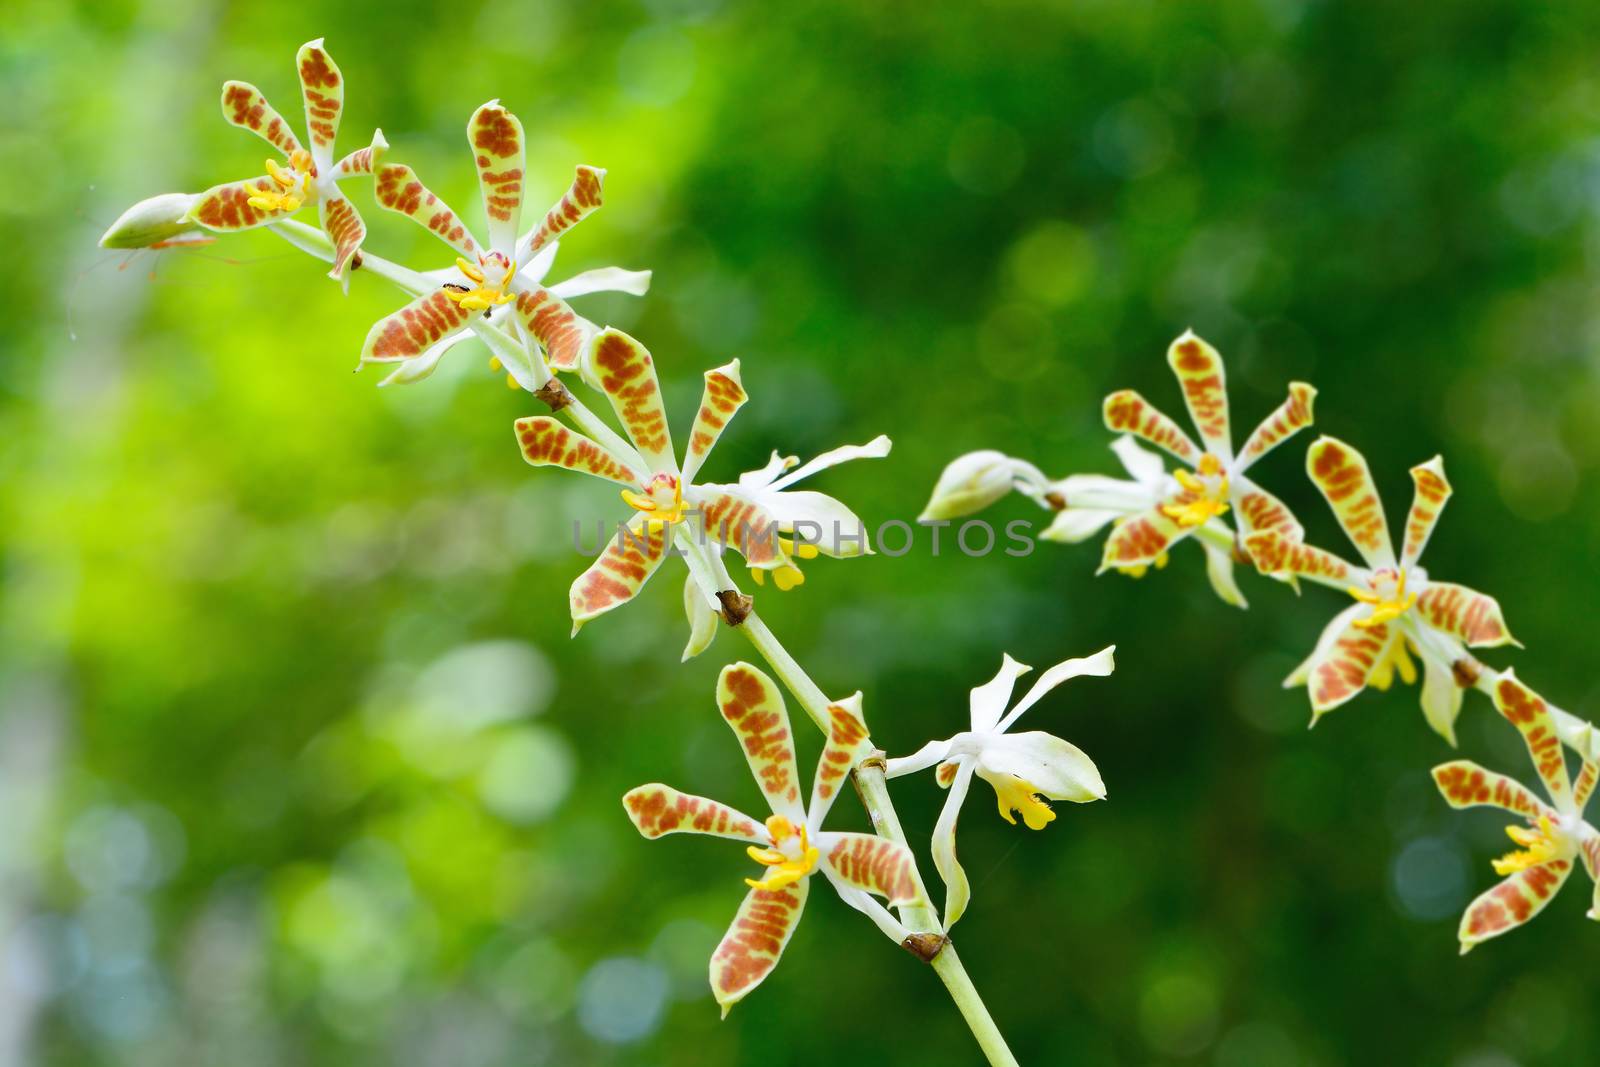 Staurochilus orchid by panuruangjan